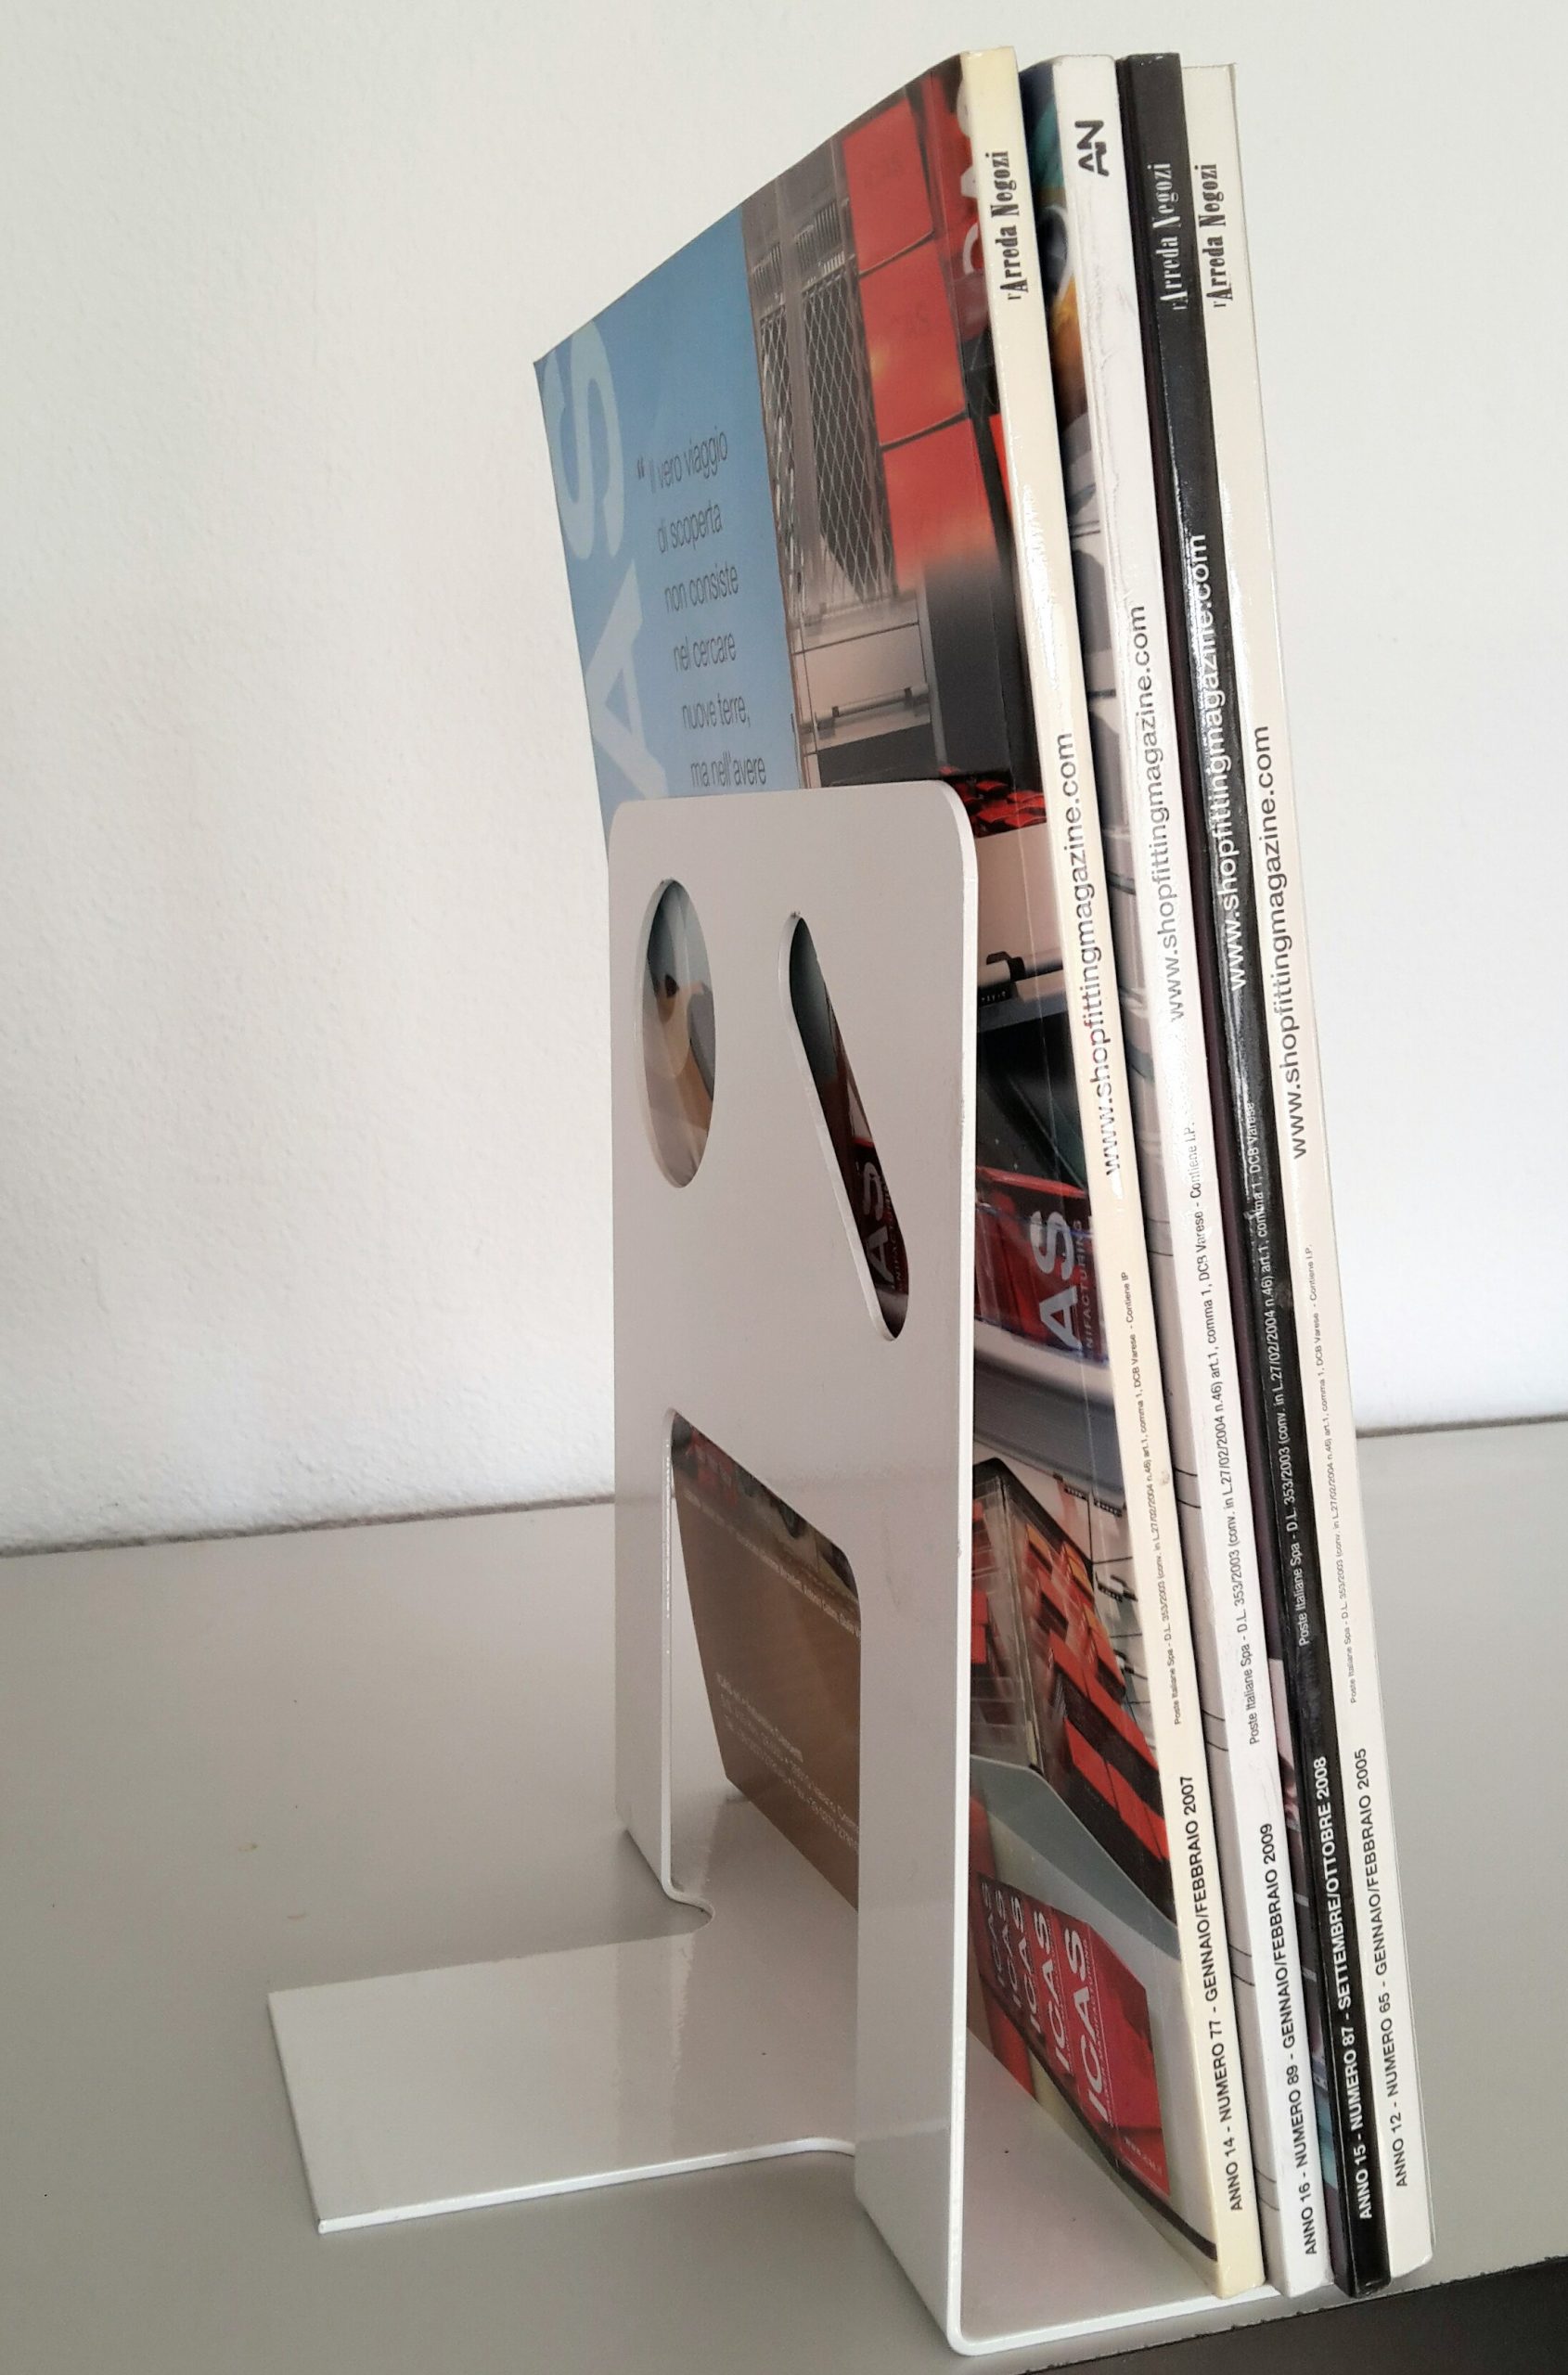 Divisorio reggi libro misure 20 x 22,5 cm c.ca. – LAGO NERINO shop on-line